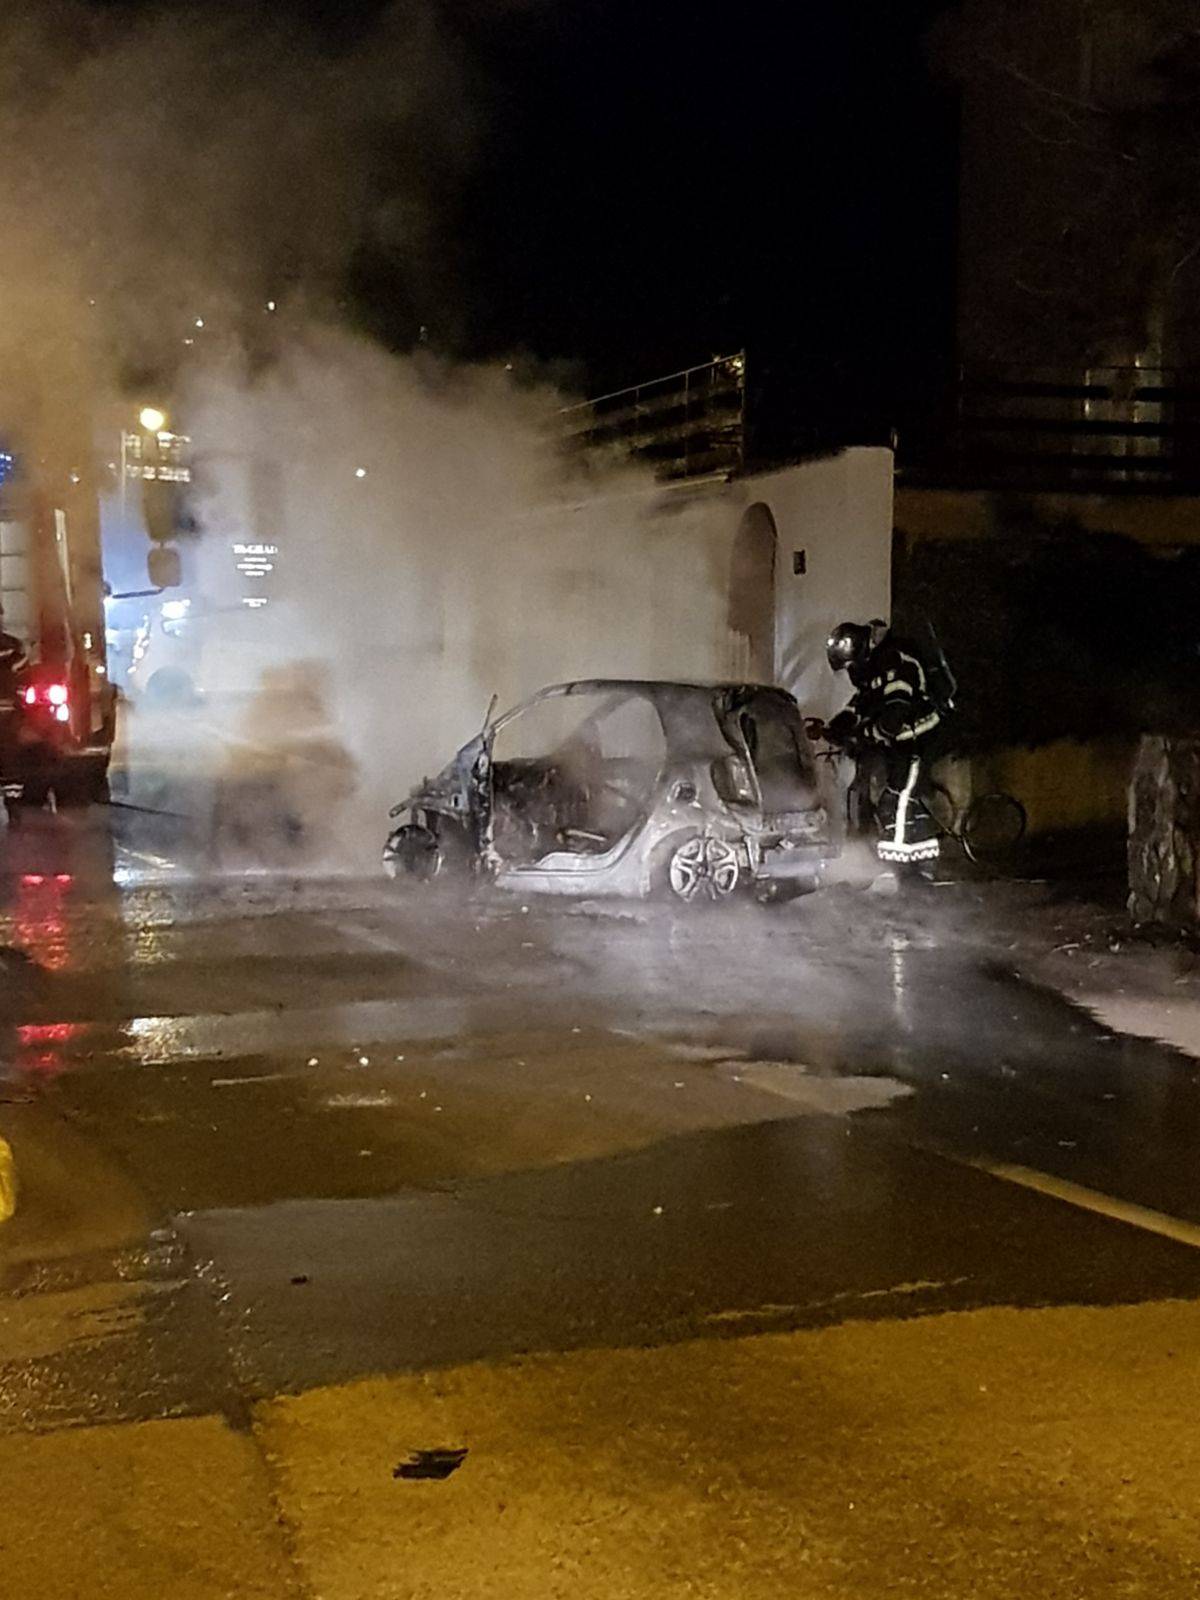 Zapalio se auto u Zagrebu: Šest vatrogasaca gasilo požar